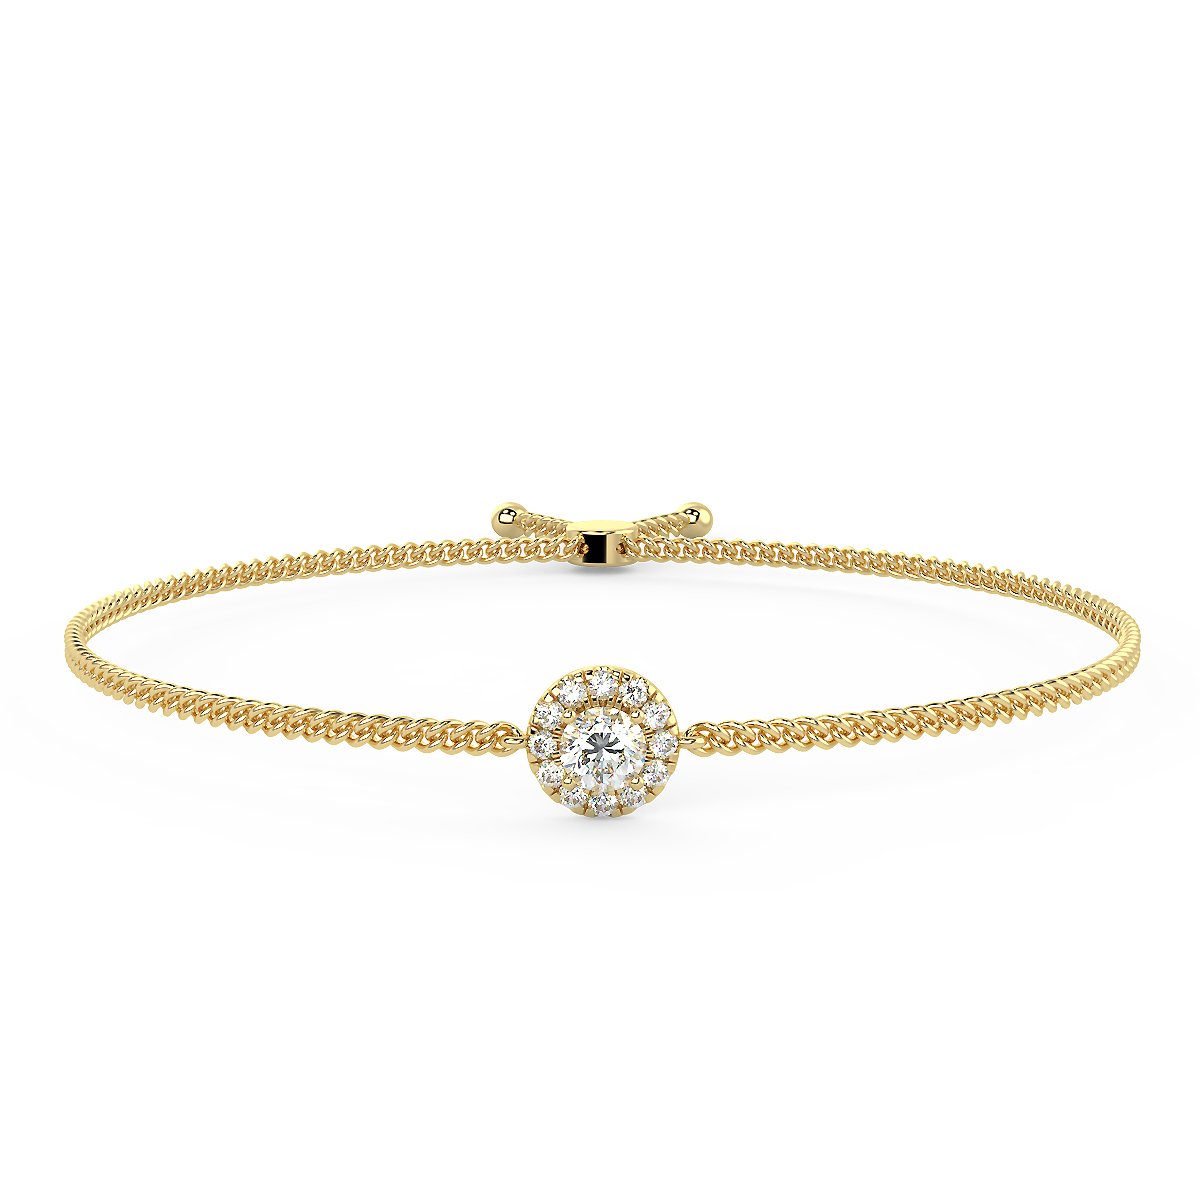 Buy 14k Yellow Gold Adjustable Diamond Cut Bead Charm Bolo Bracelet 925  at Amazonin